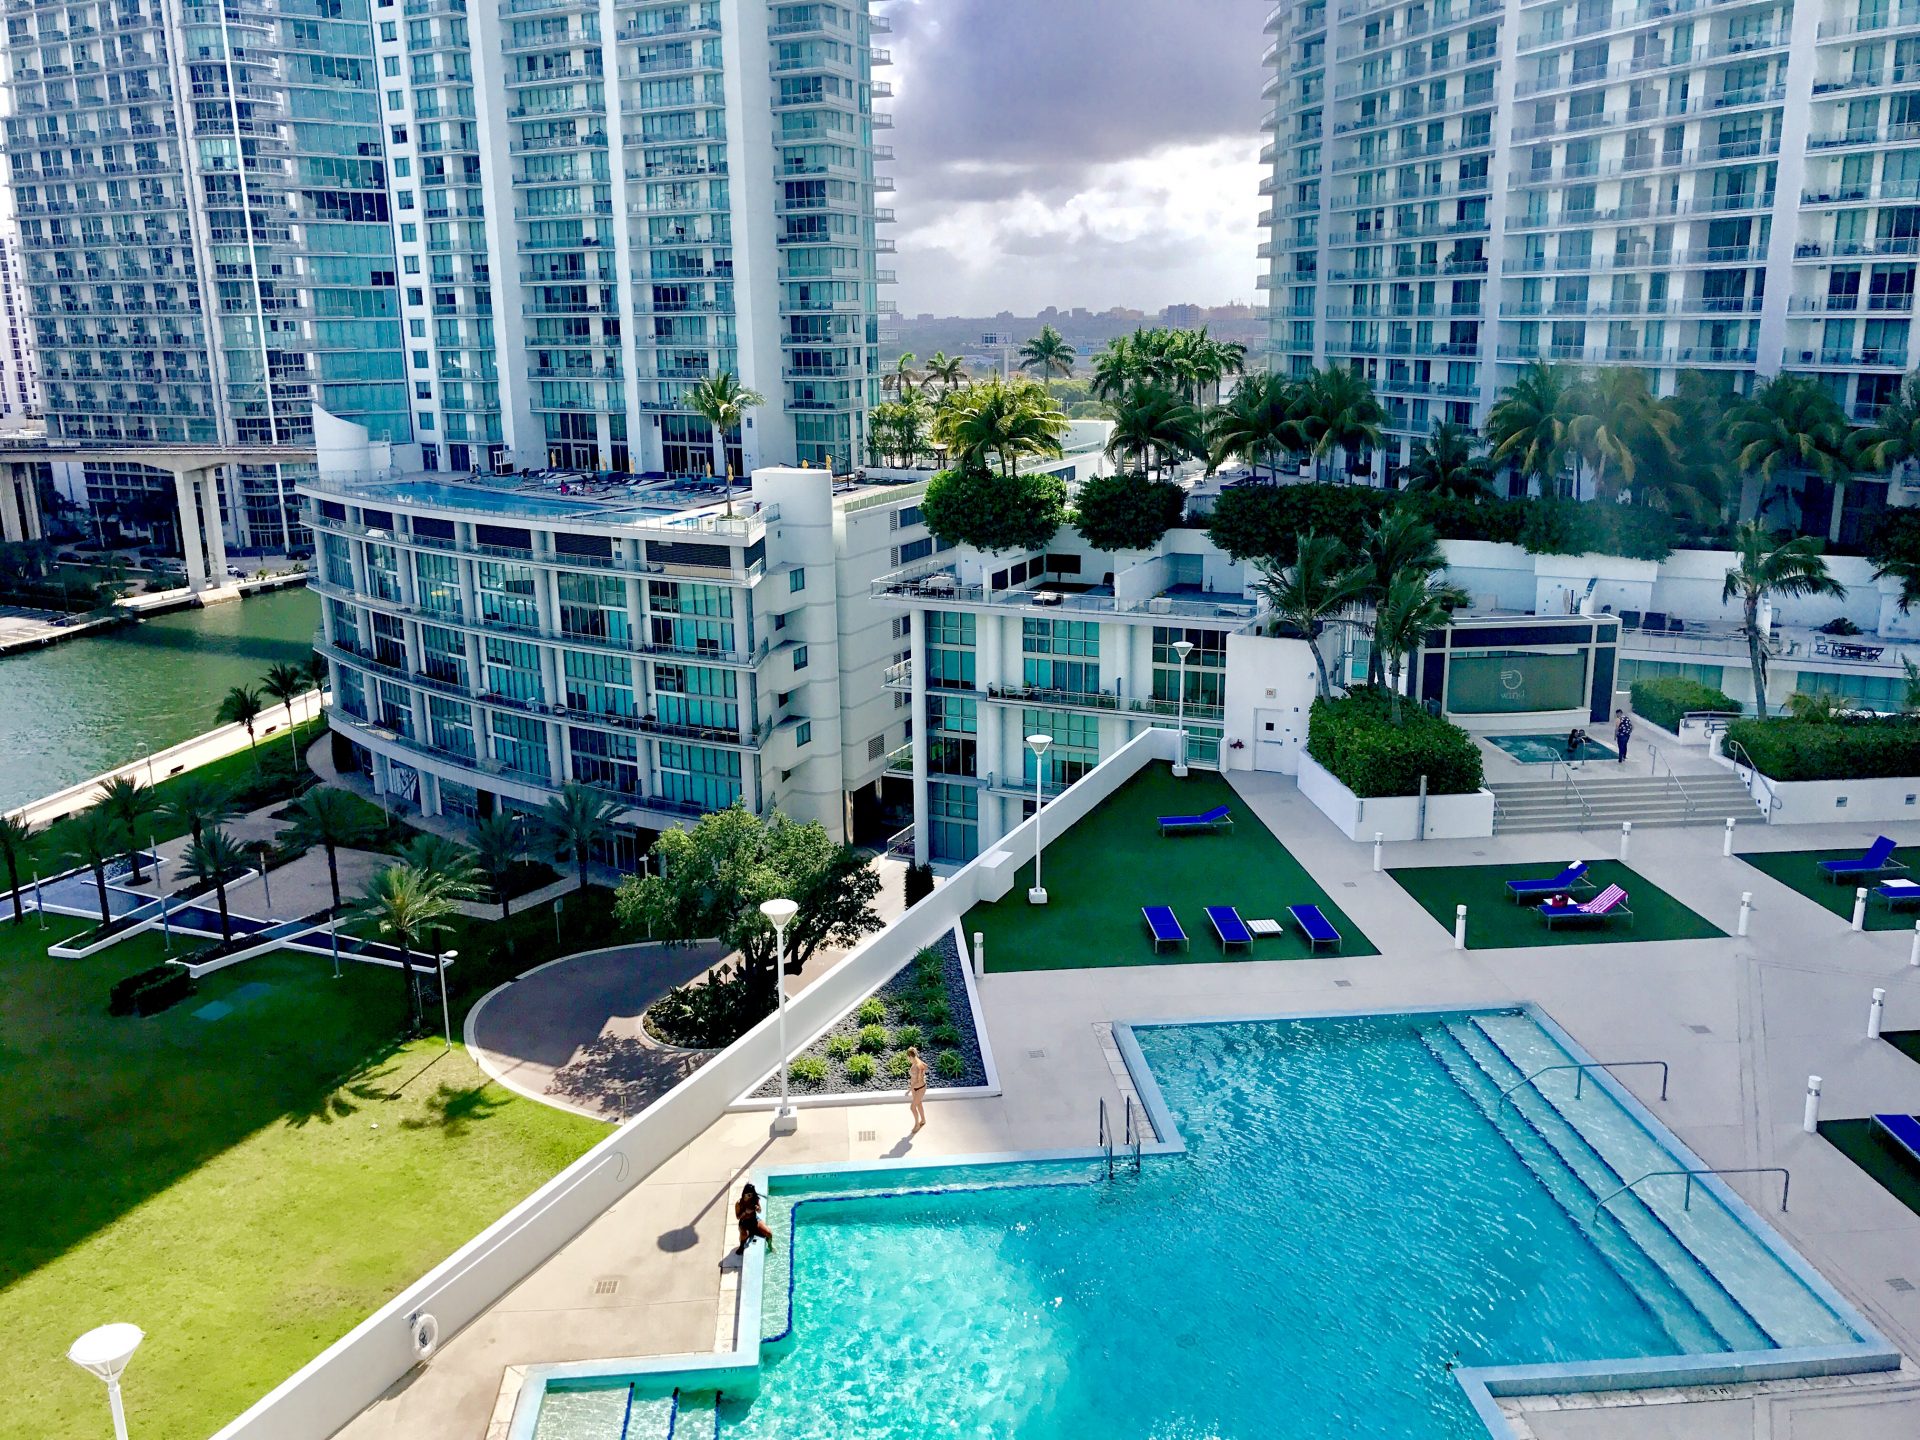 Image of condo pool in Miami Florida